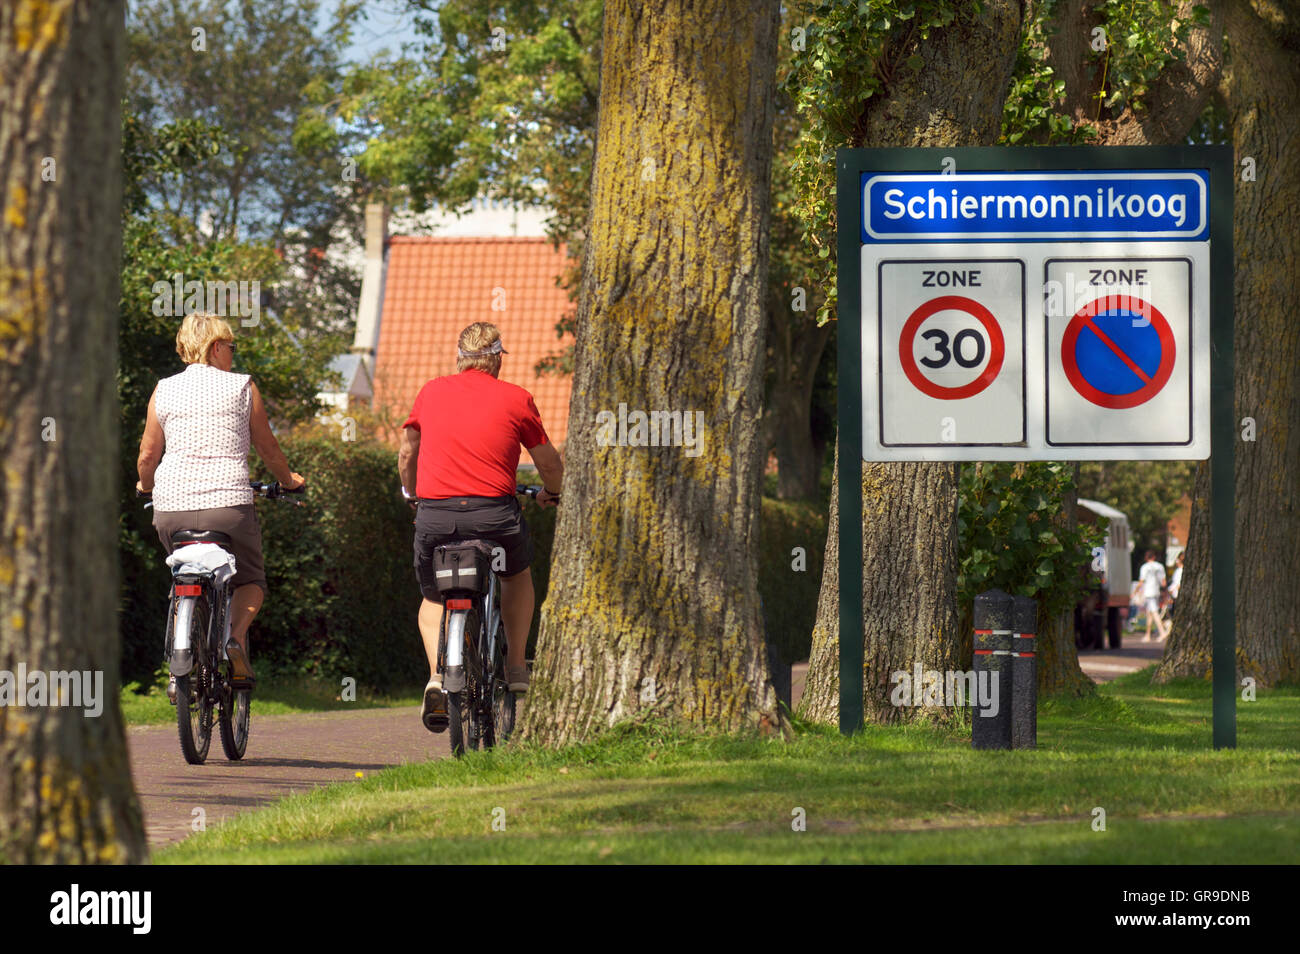 Elderly couple on bicycles riding into the village of Schiermonnigoog on the island Schiermonnikoog Stock Photo